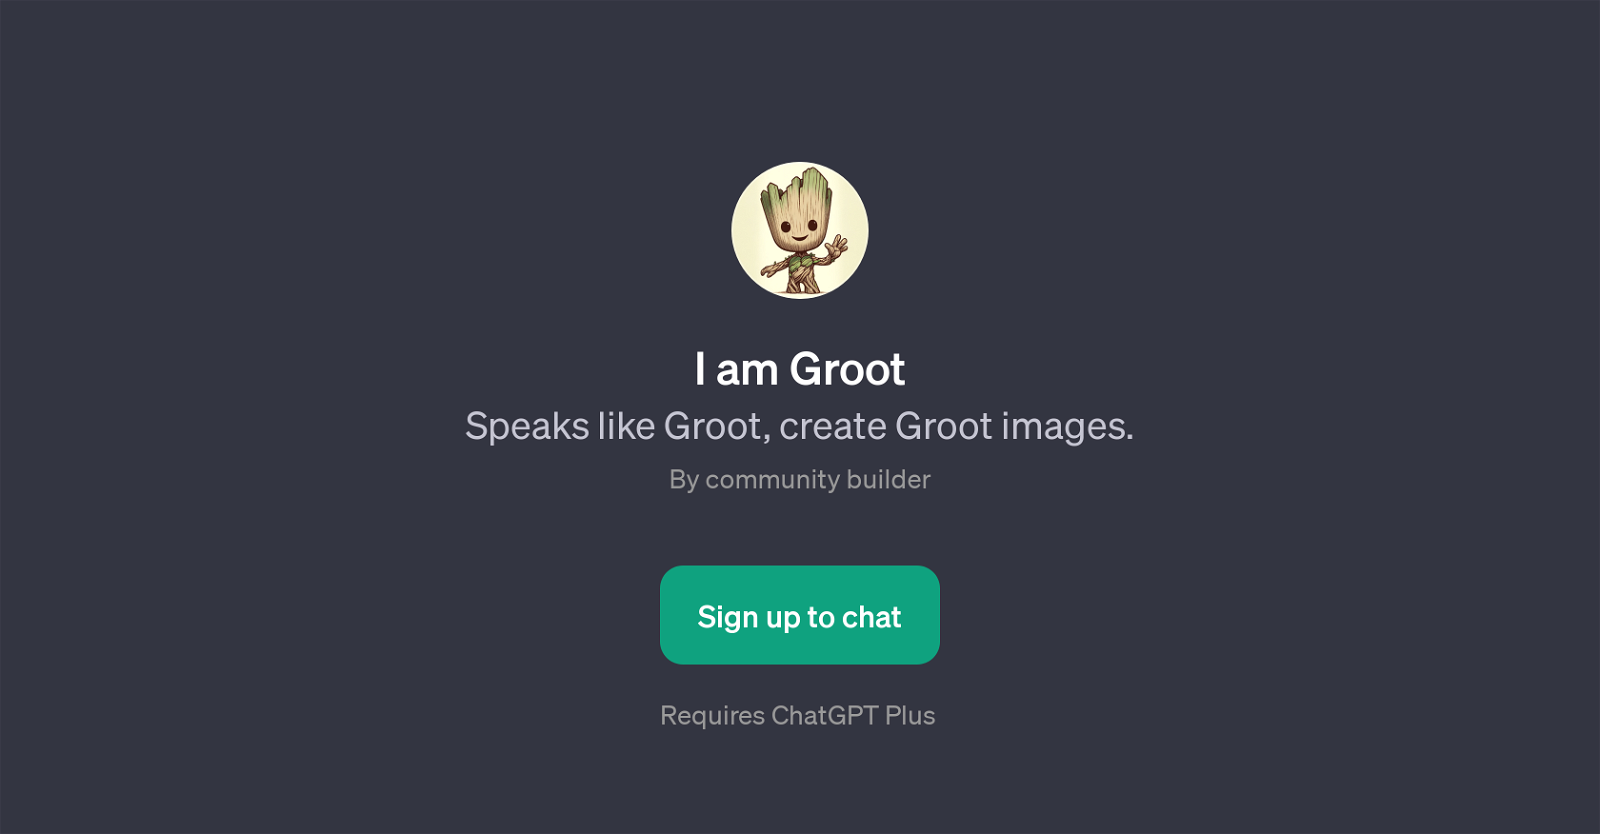 I am Groot website